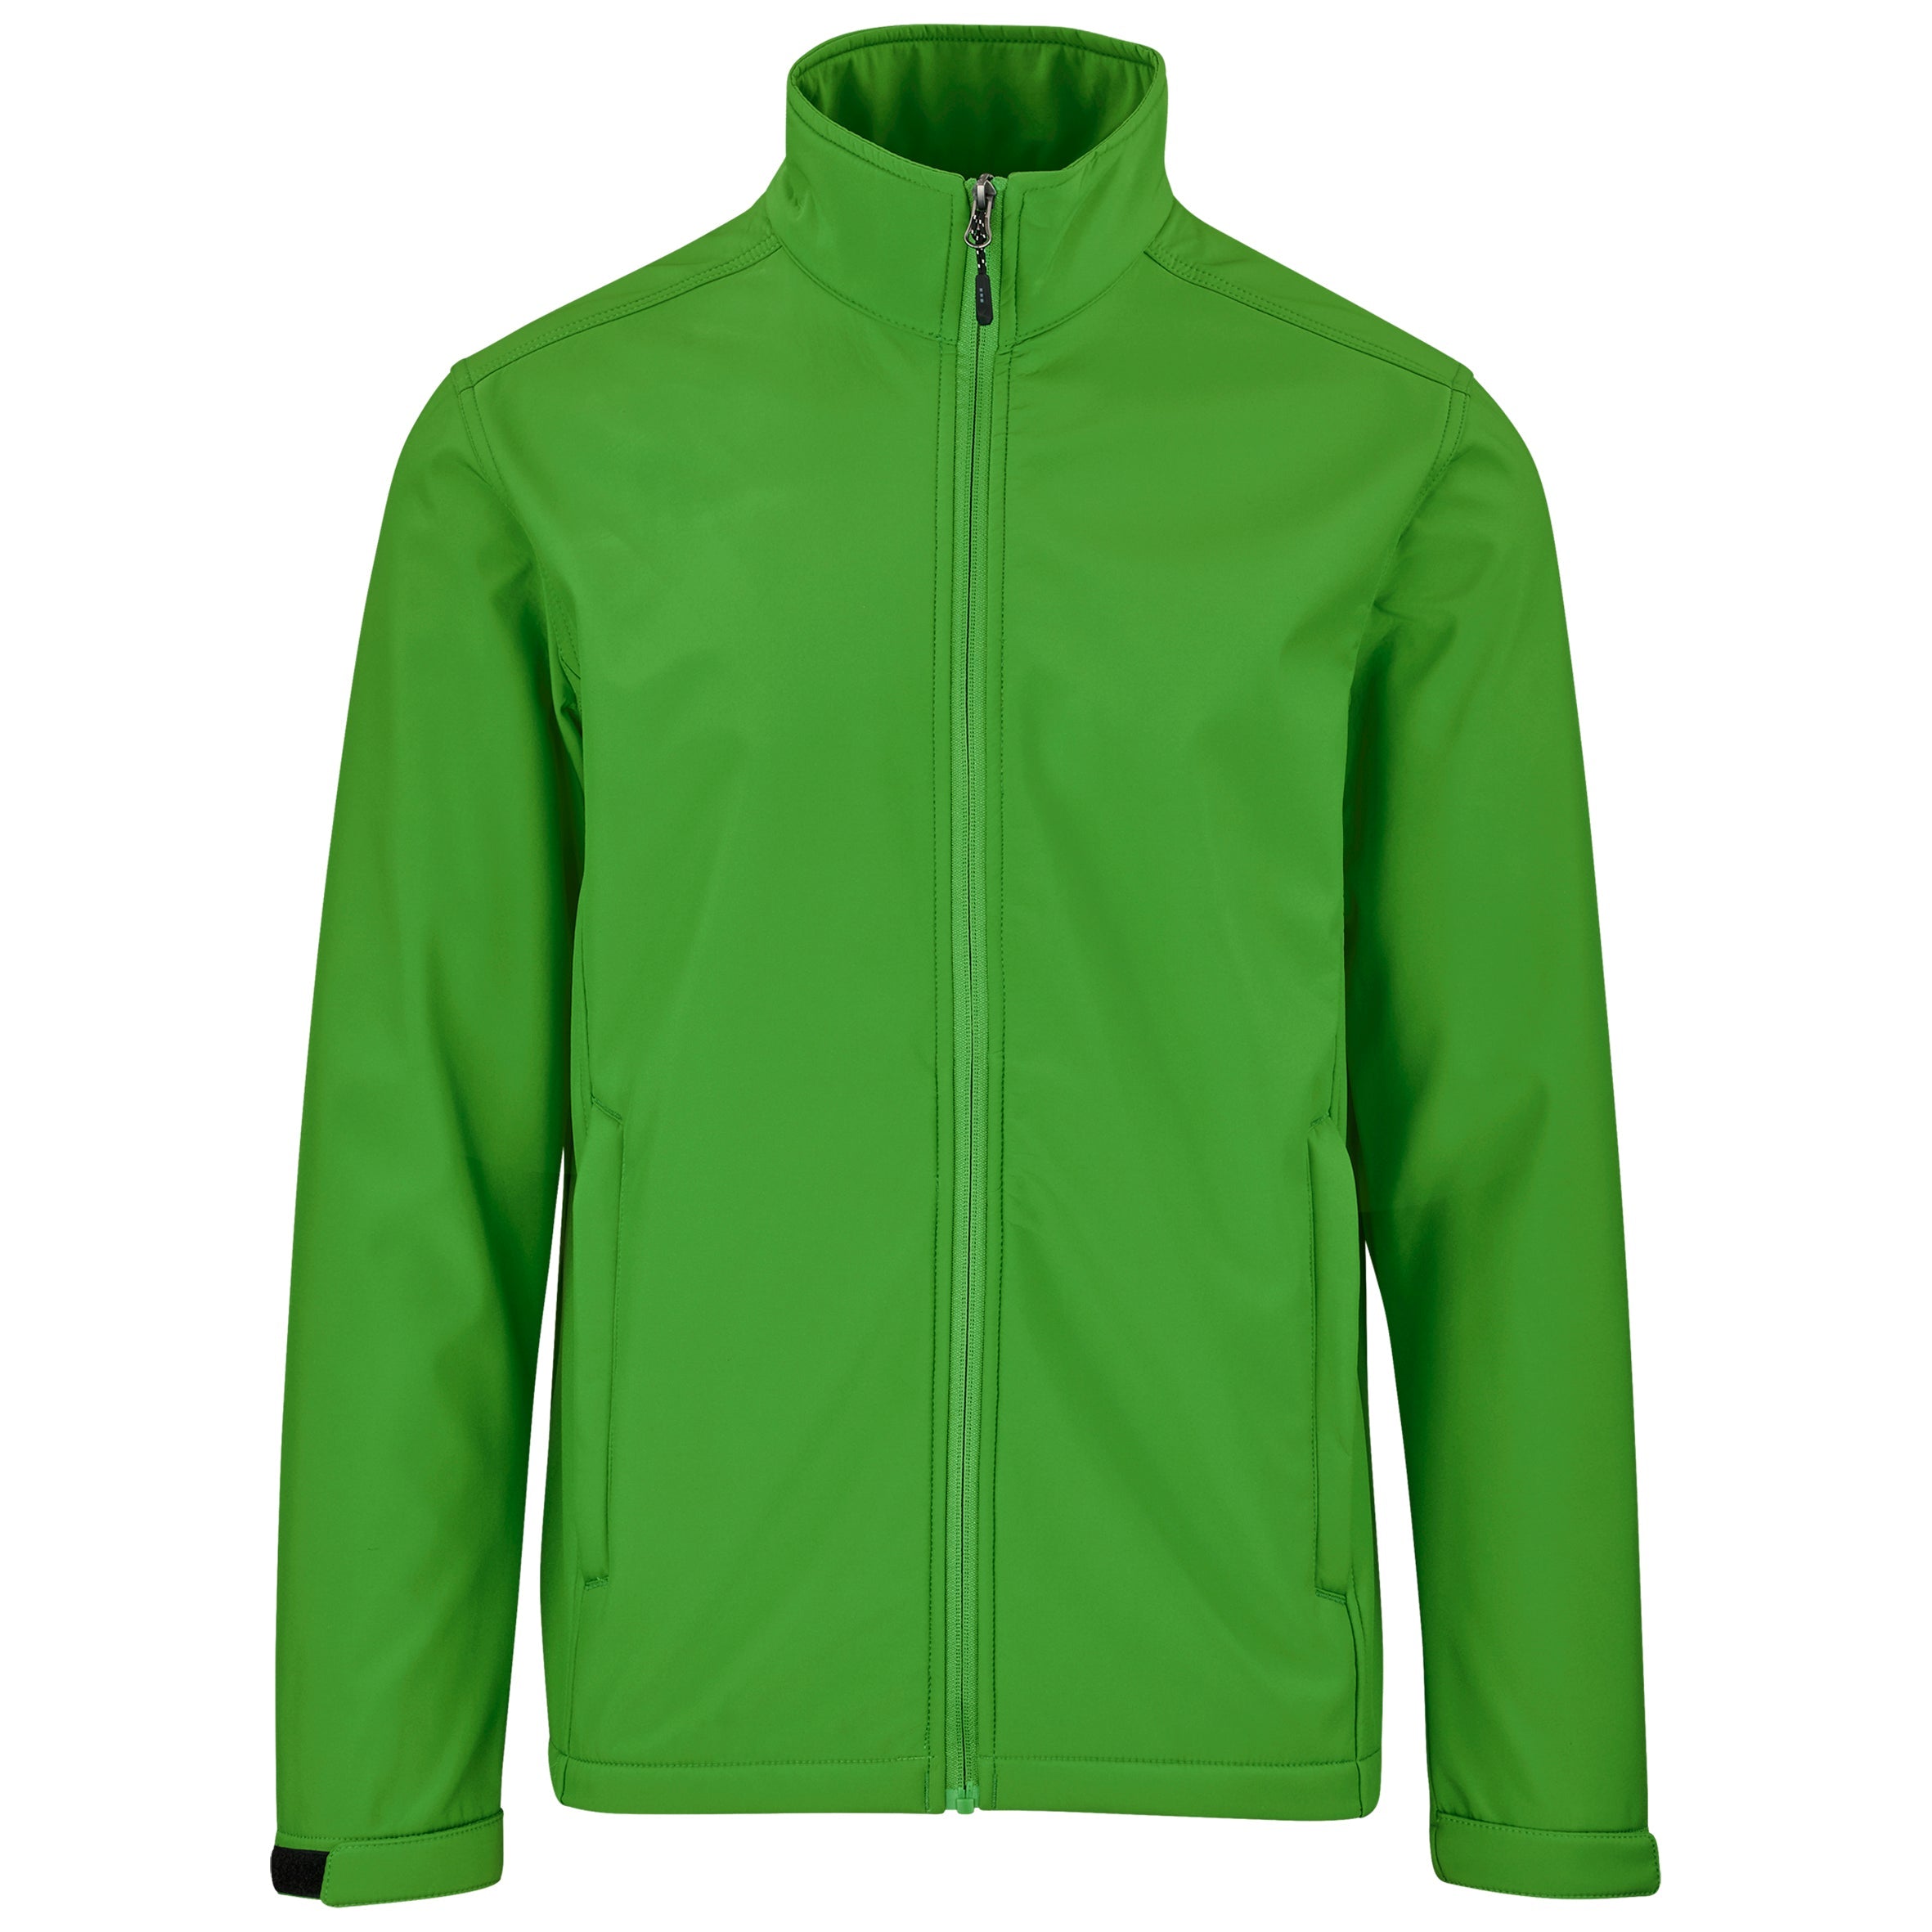 Mens Maxson Softshell Jacket - Orange Only-Coats & Jackets-2XL-Green-G